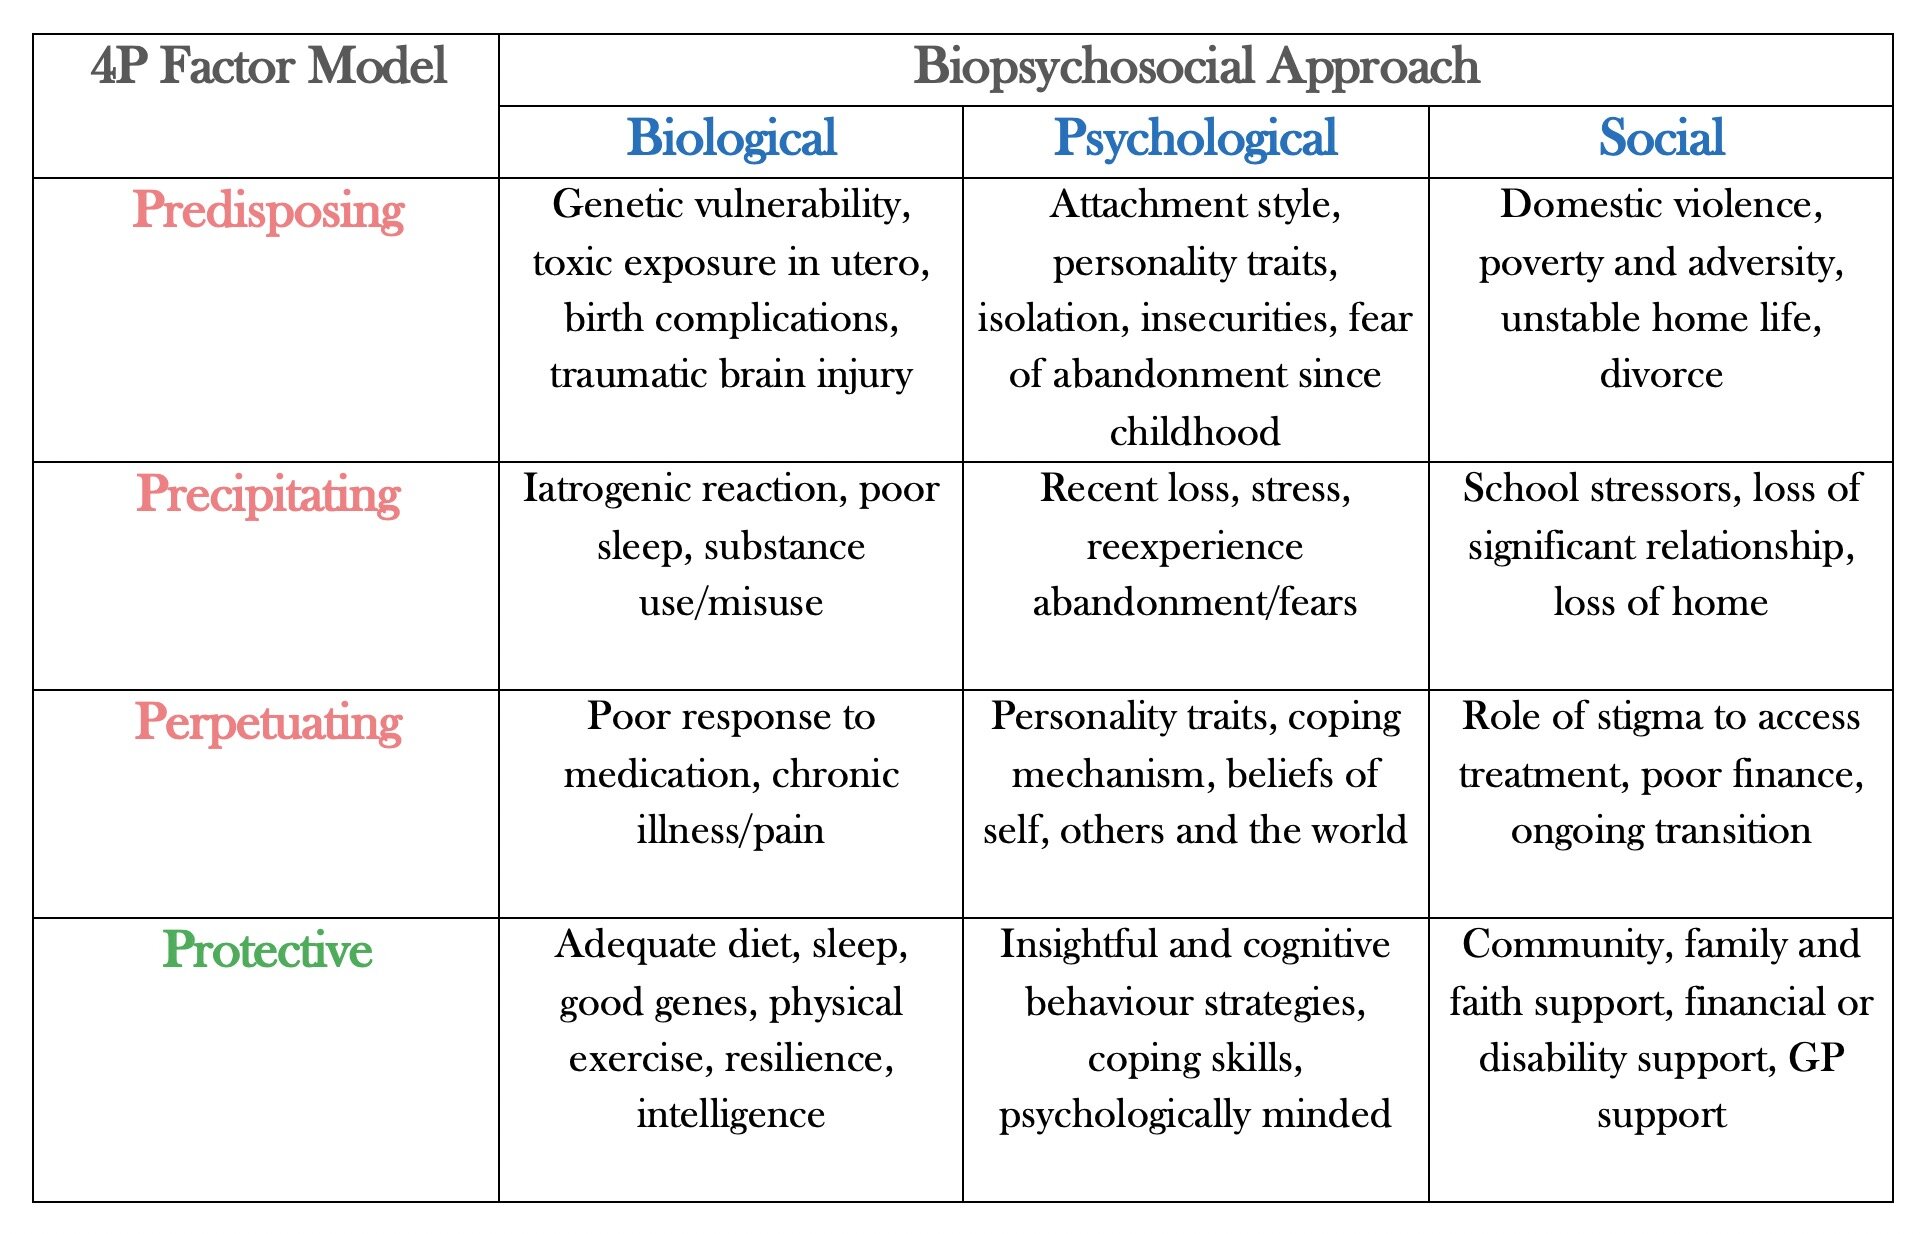 biopsychosocial schizophrenia